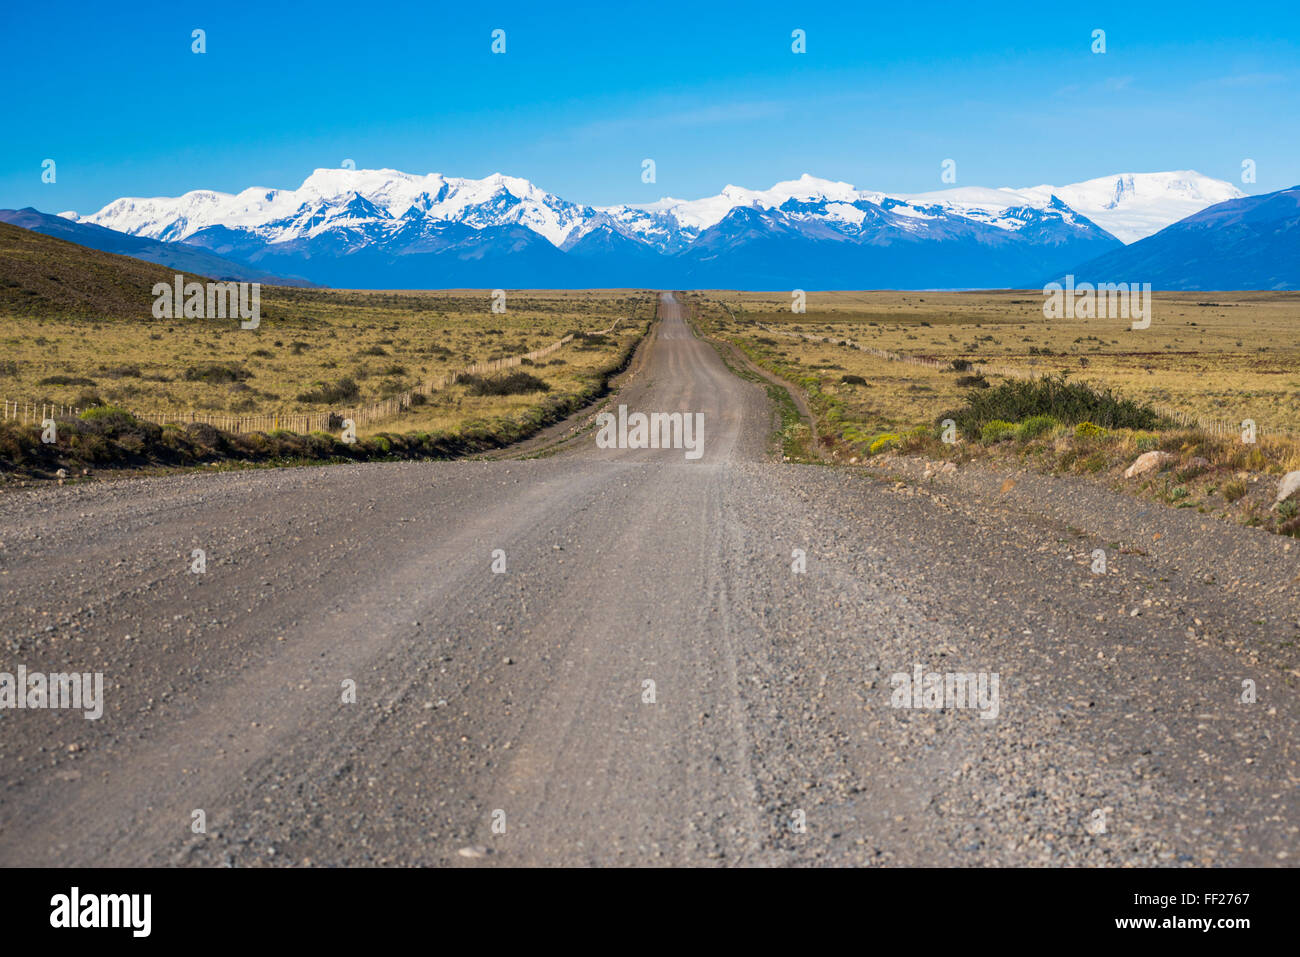 RMong straight road to Perito Moreno GRMaciar, ERM CaRMafate, Patagonia, Argentina, South America Stock Photo